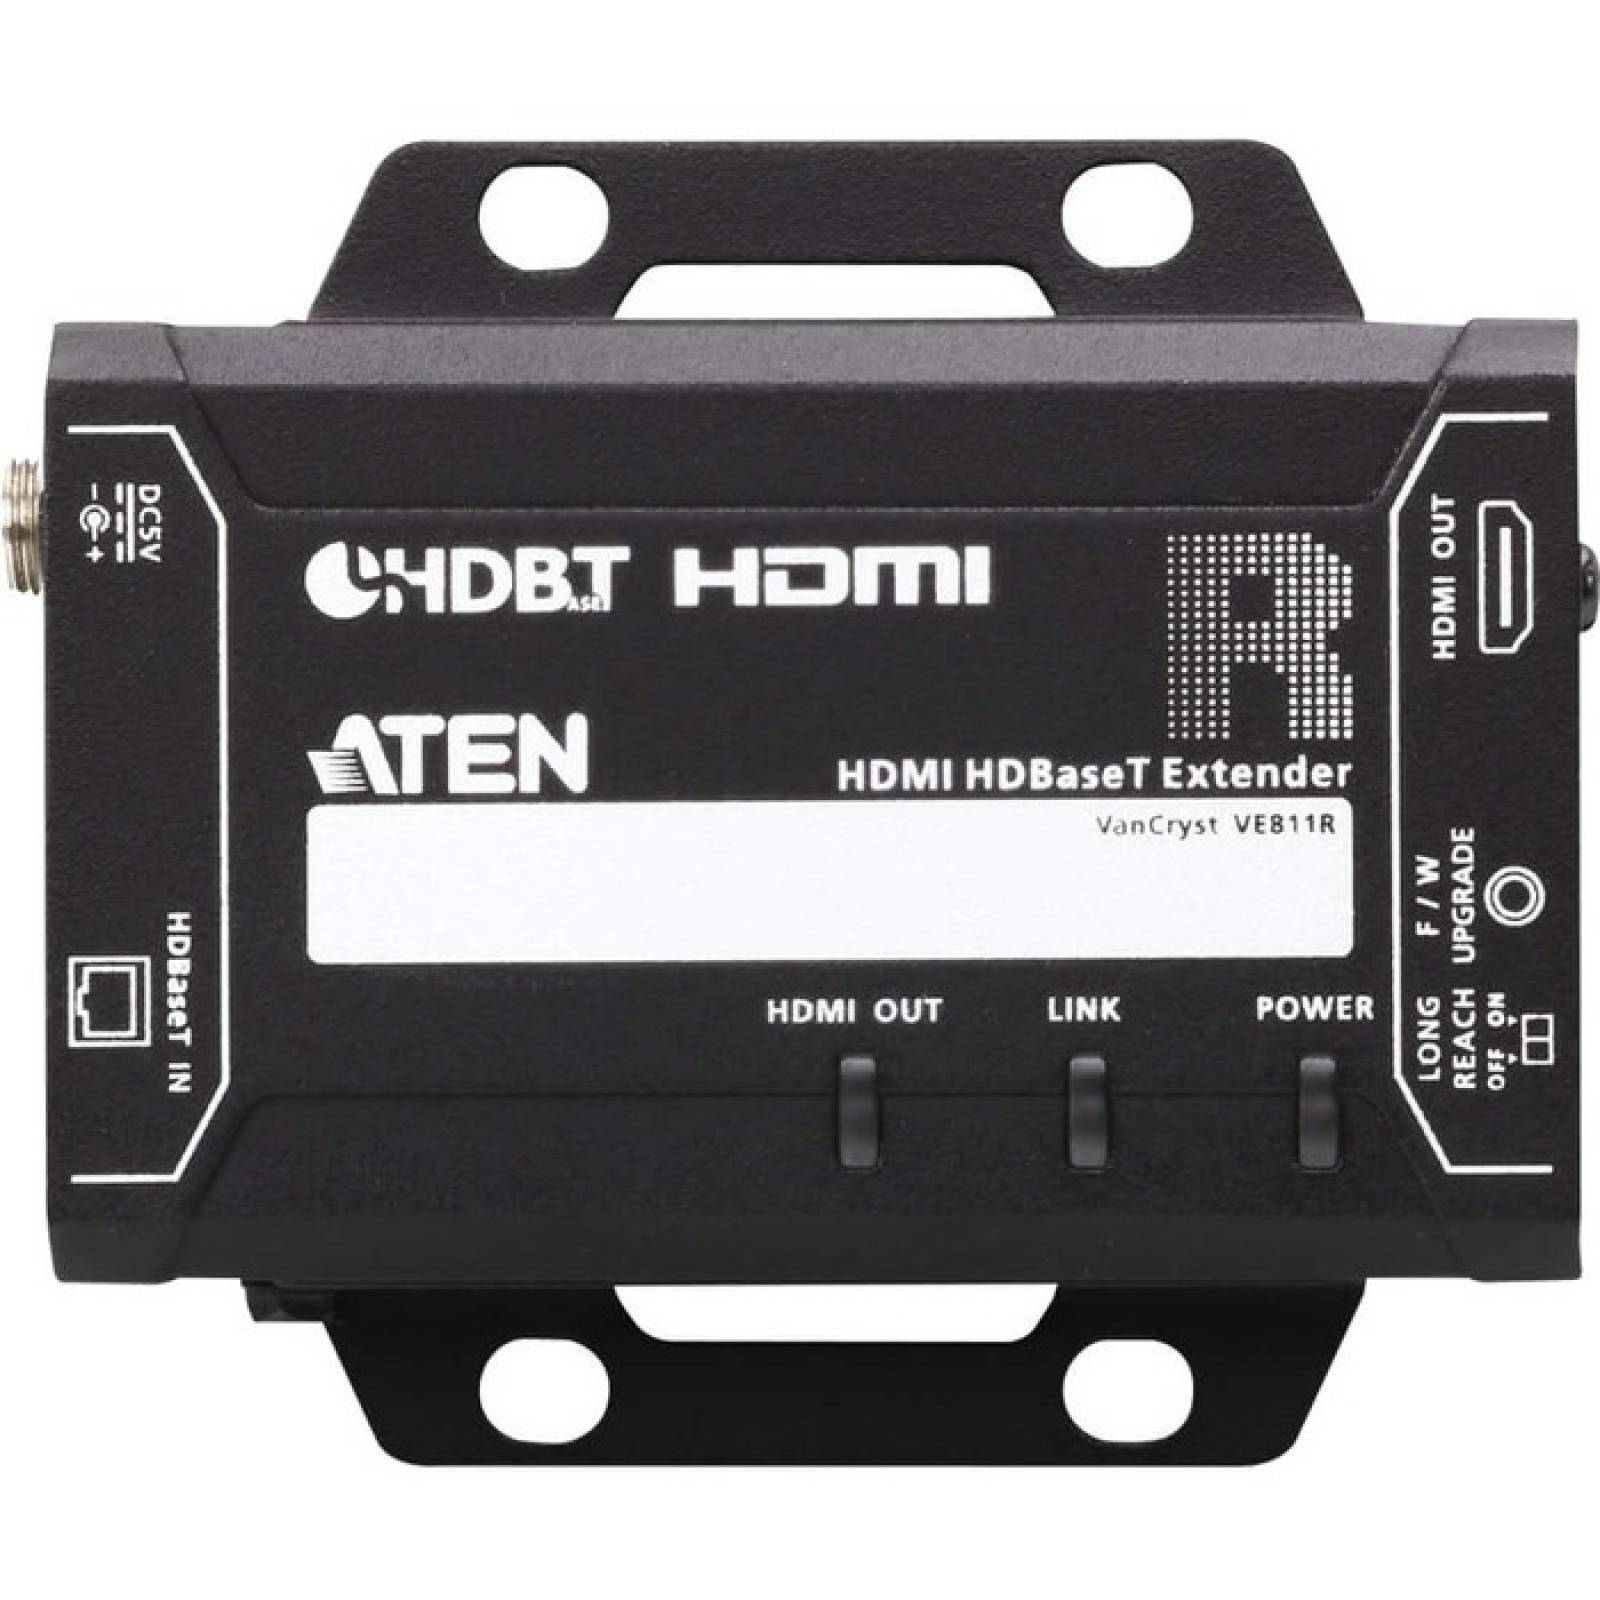 RECEPTOR DE HDBASET DE HDMI HASTA  330FT 4K  492FT 1080P MODO DE ALCANCE